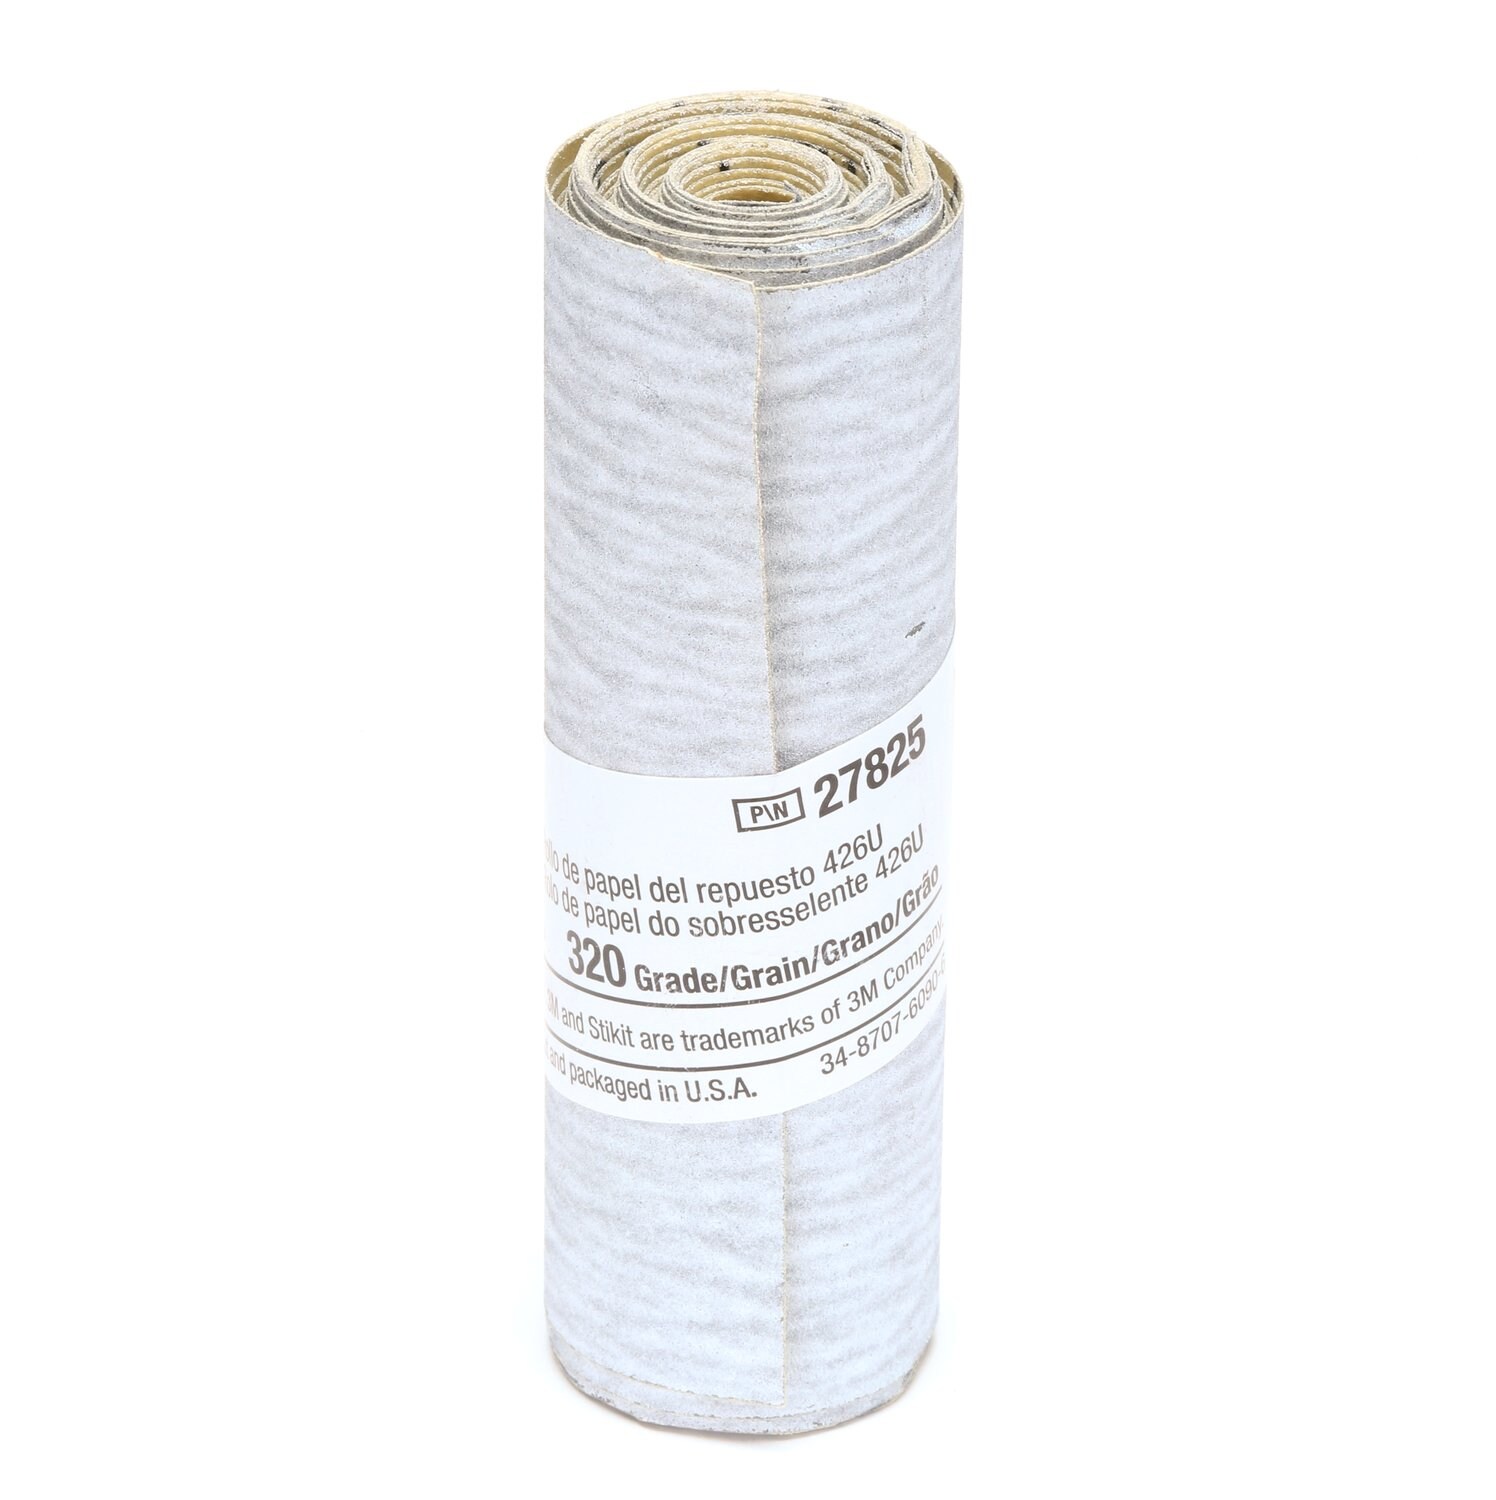 7010308160 - 3M Stikit Paper Refill Roll 426U, 320 A-weight, 3-1/4 in x 100 in,
10/Carton, 50 ea/Case